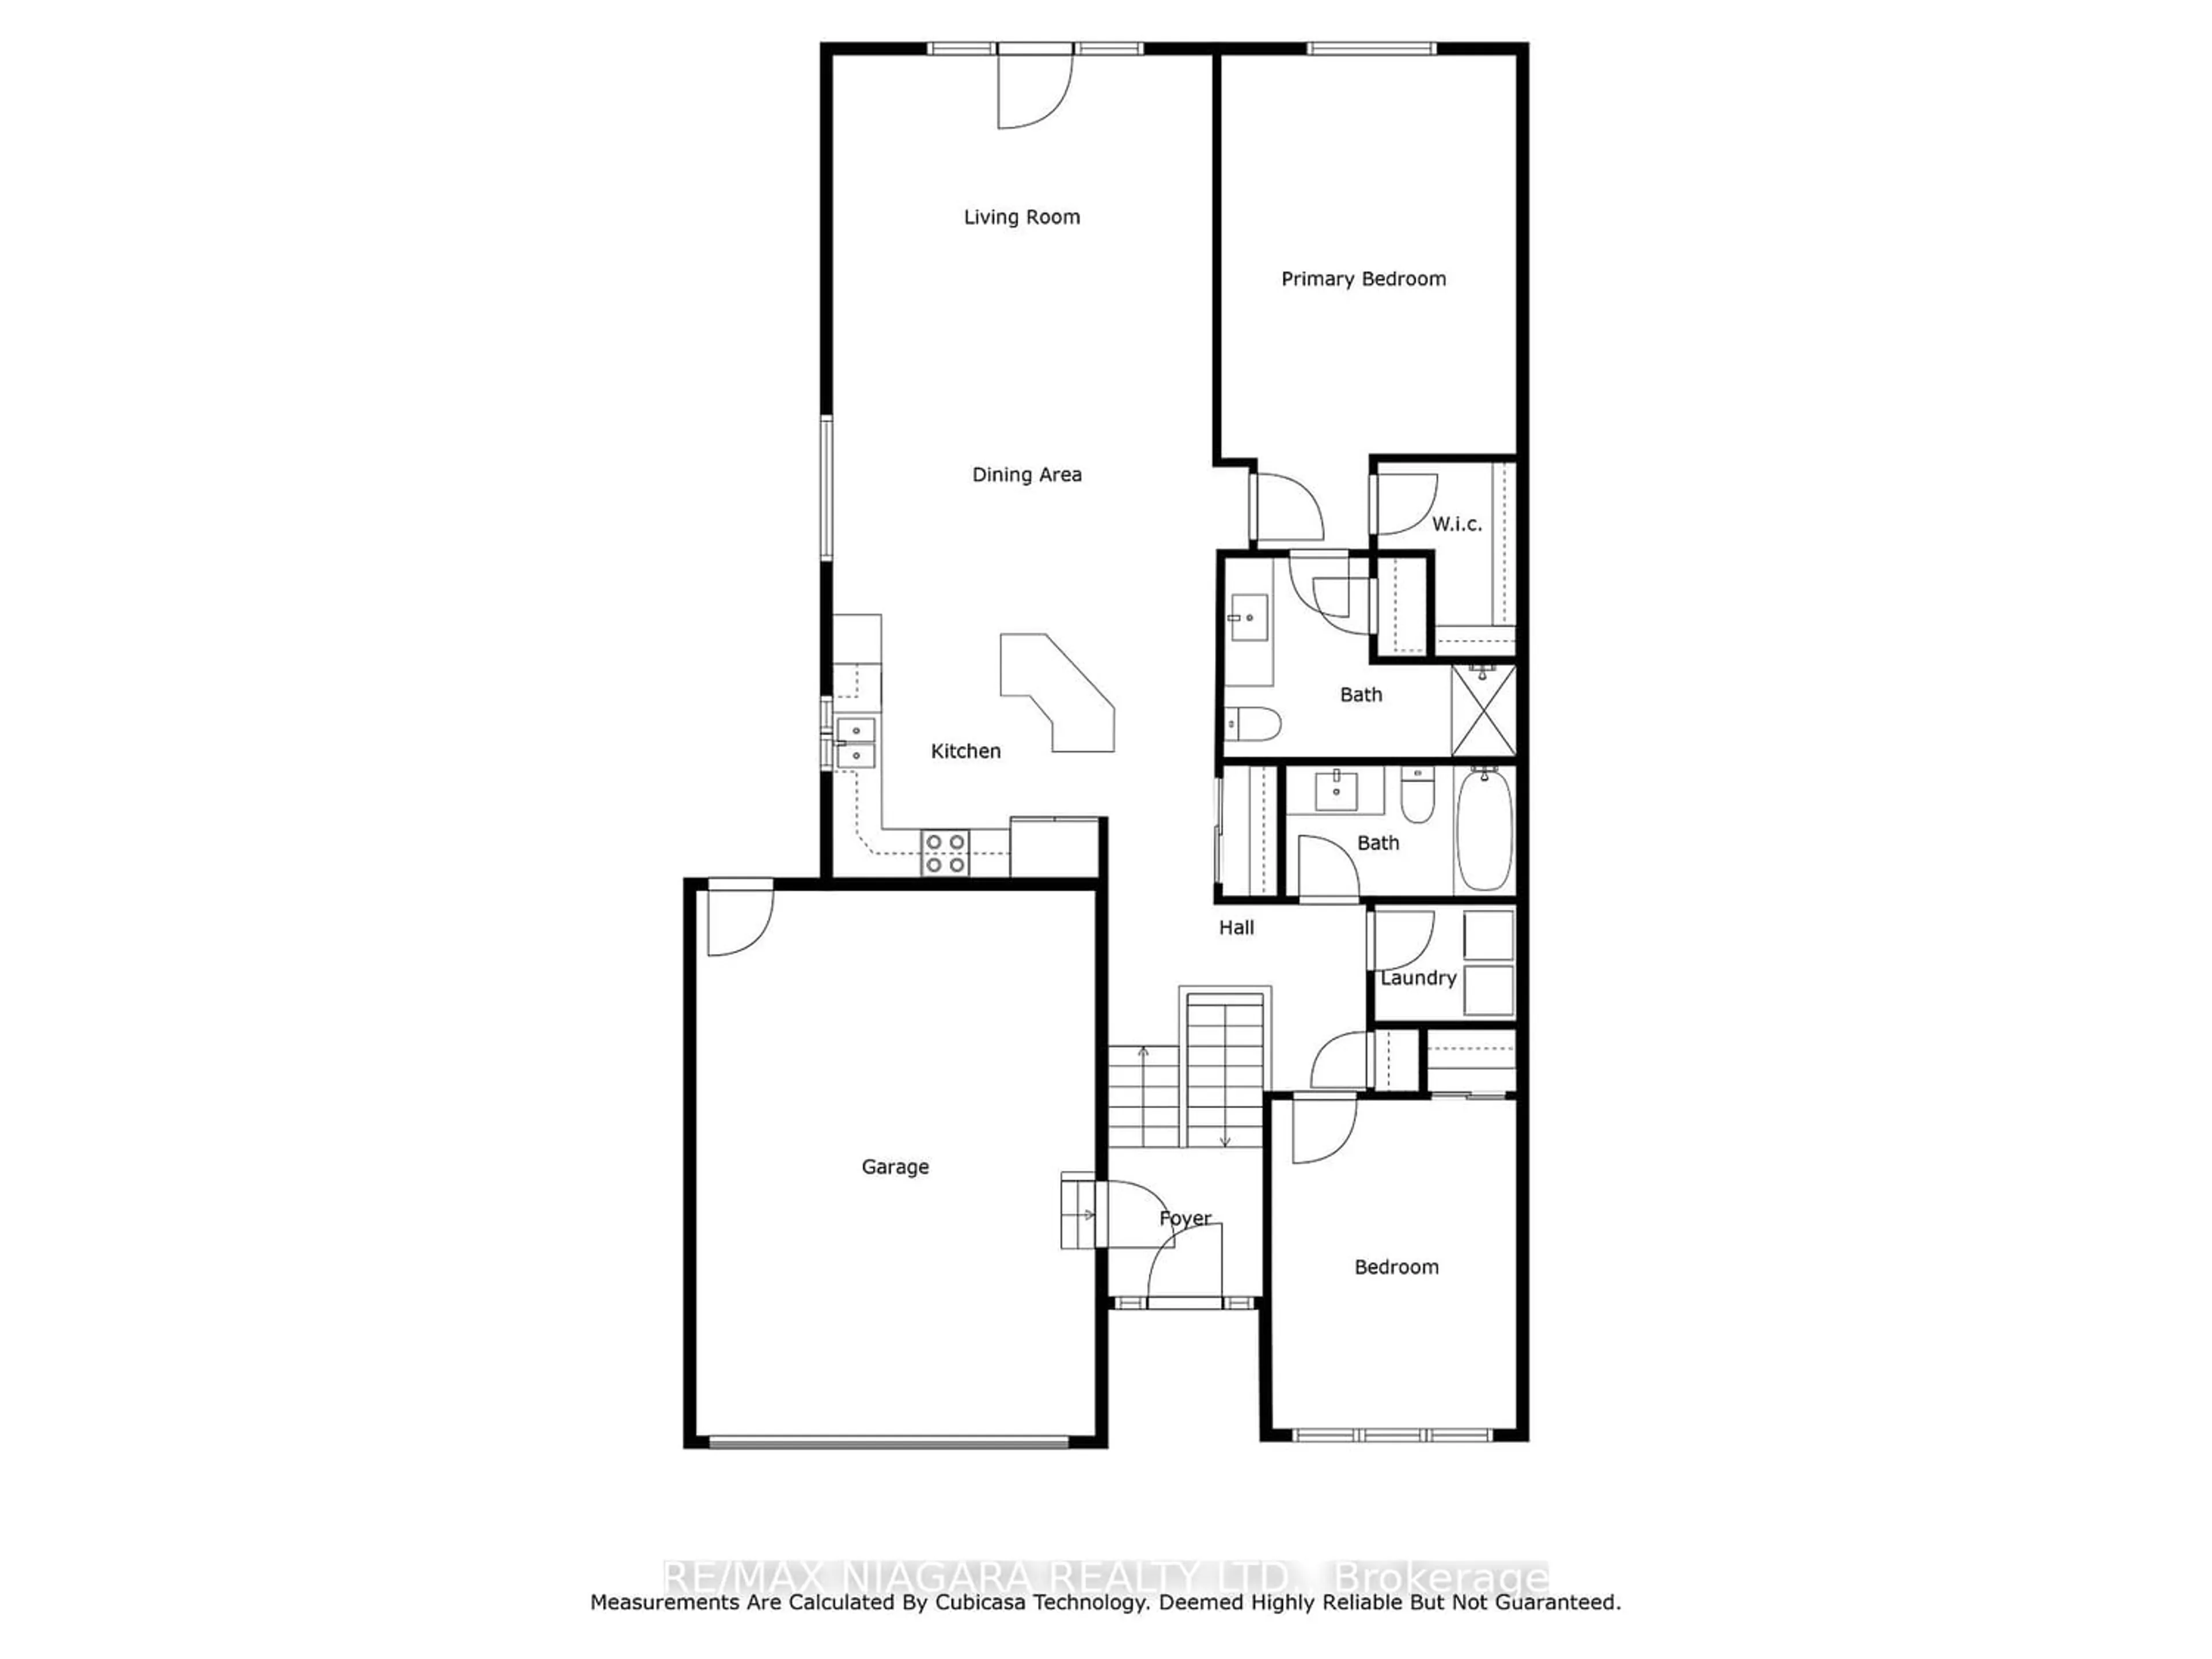 Floor plan for 8750 Upper Canada Dr, Niagara Falls Ontario L2H 0B8